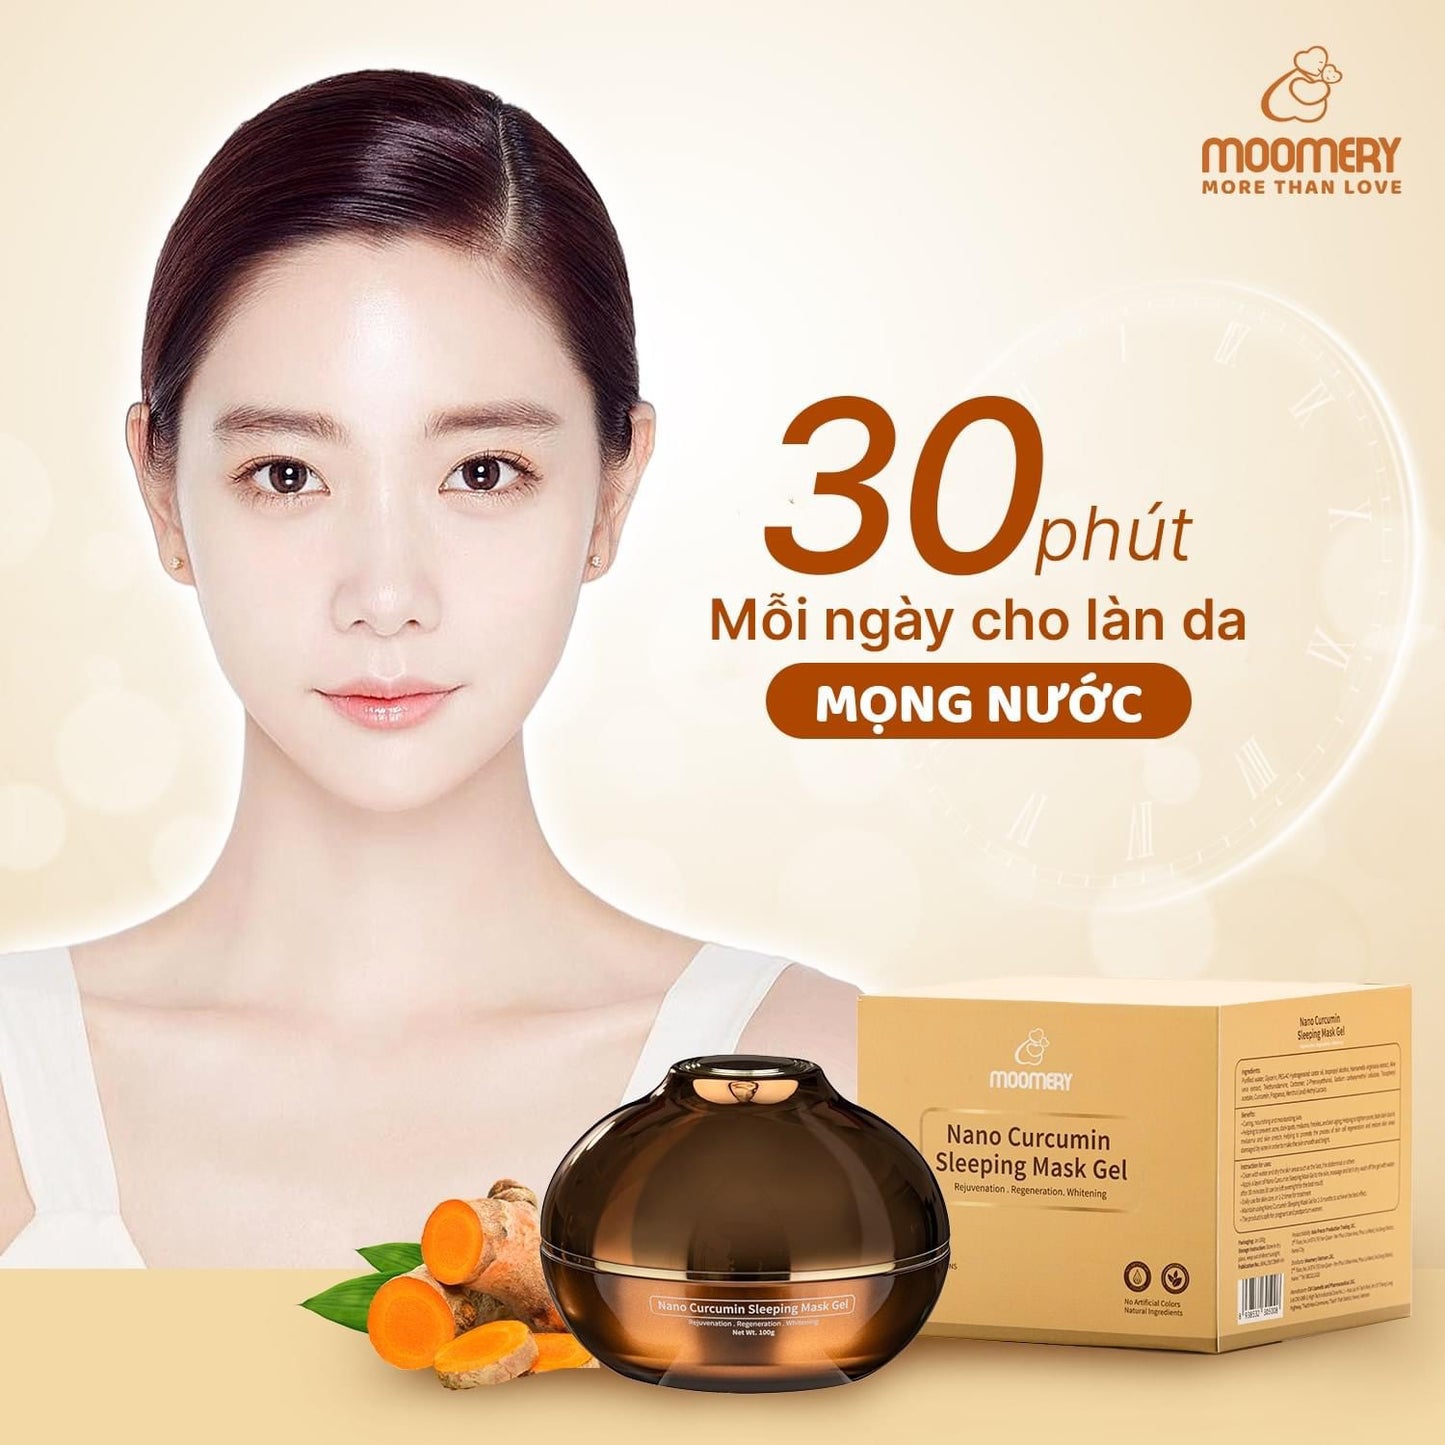 Mat na ngu Nano Cucurmin sleeping mask gel (vietnam)